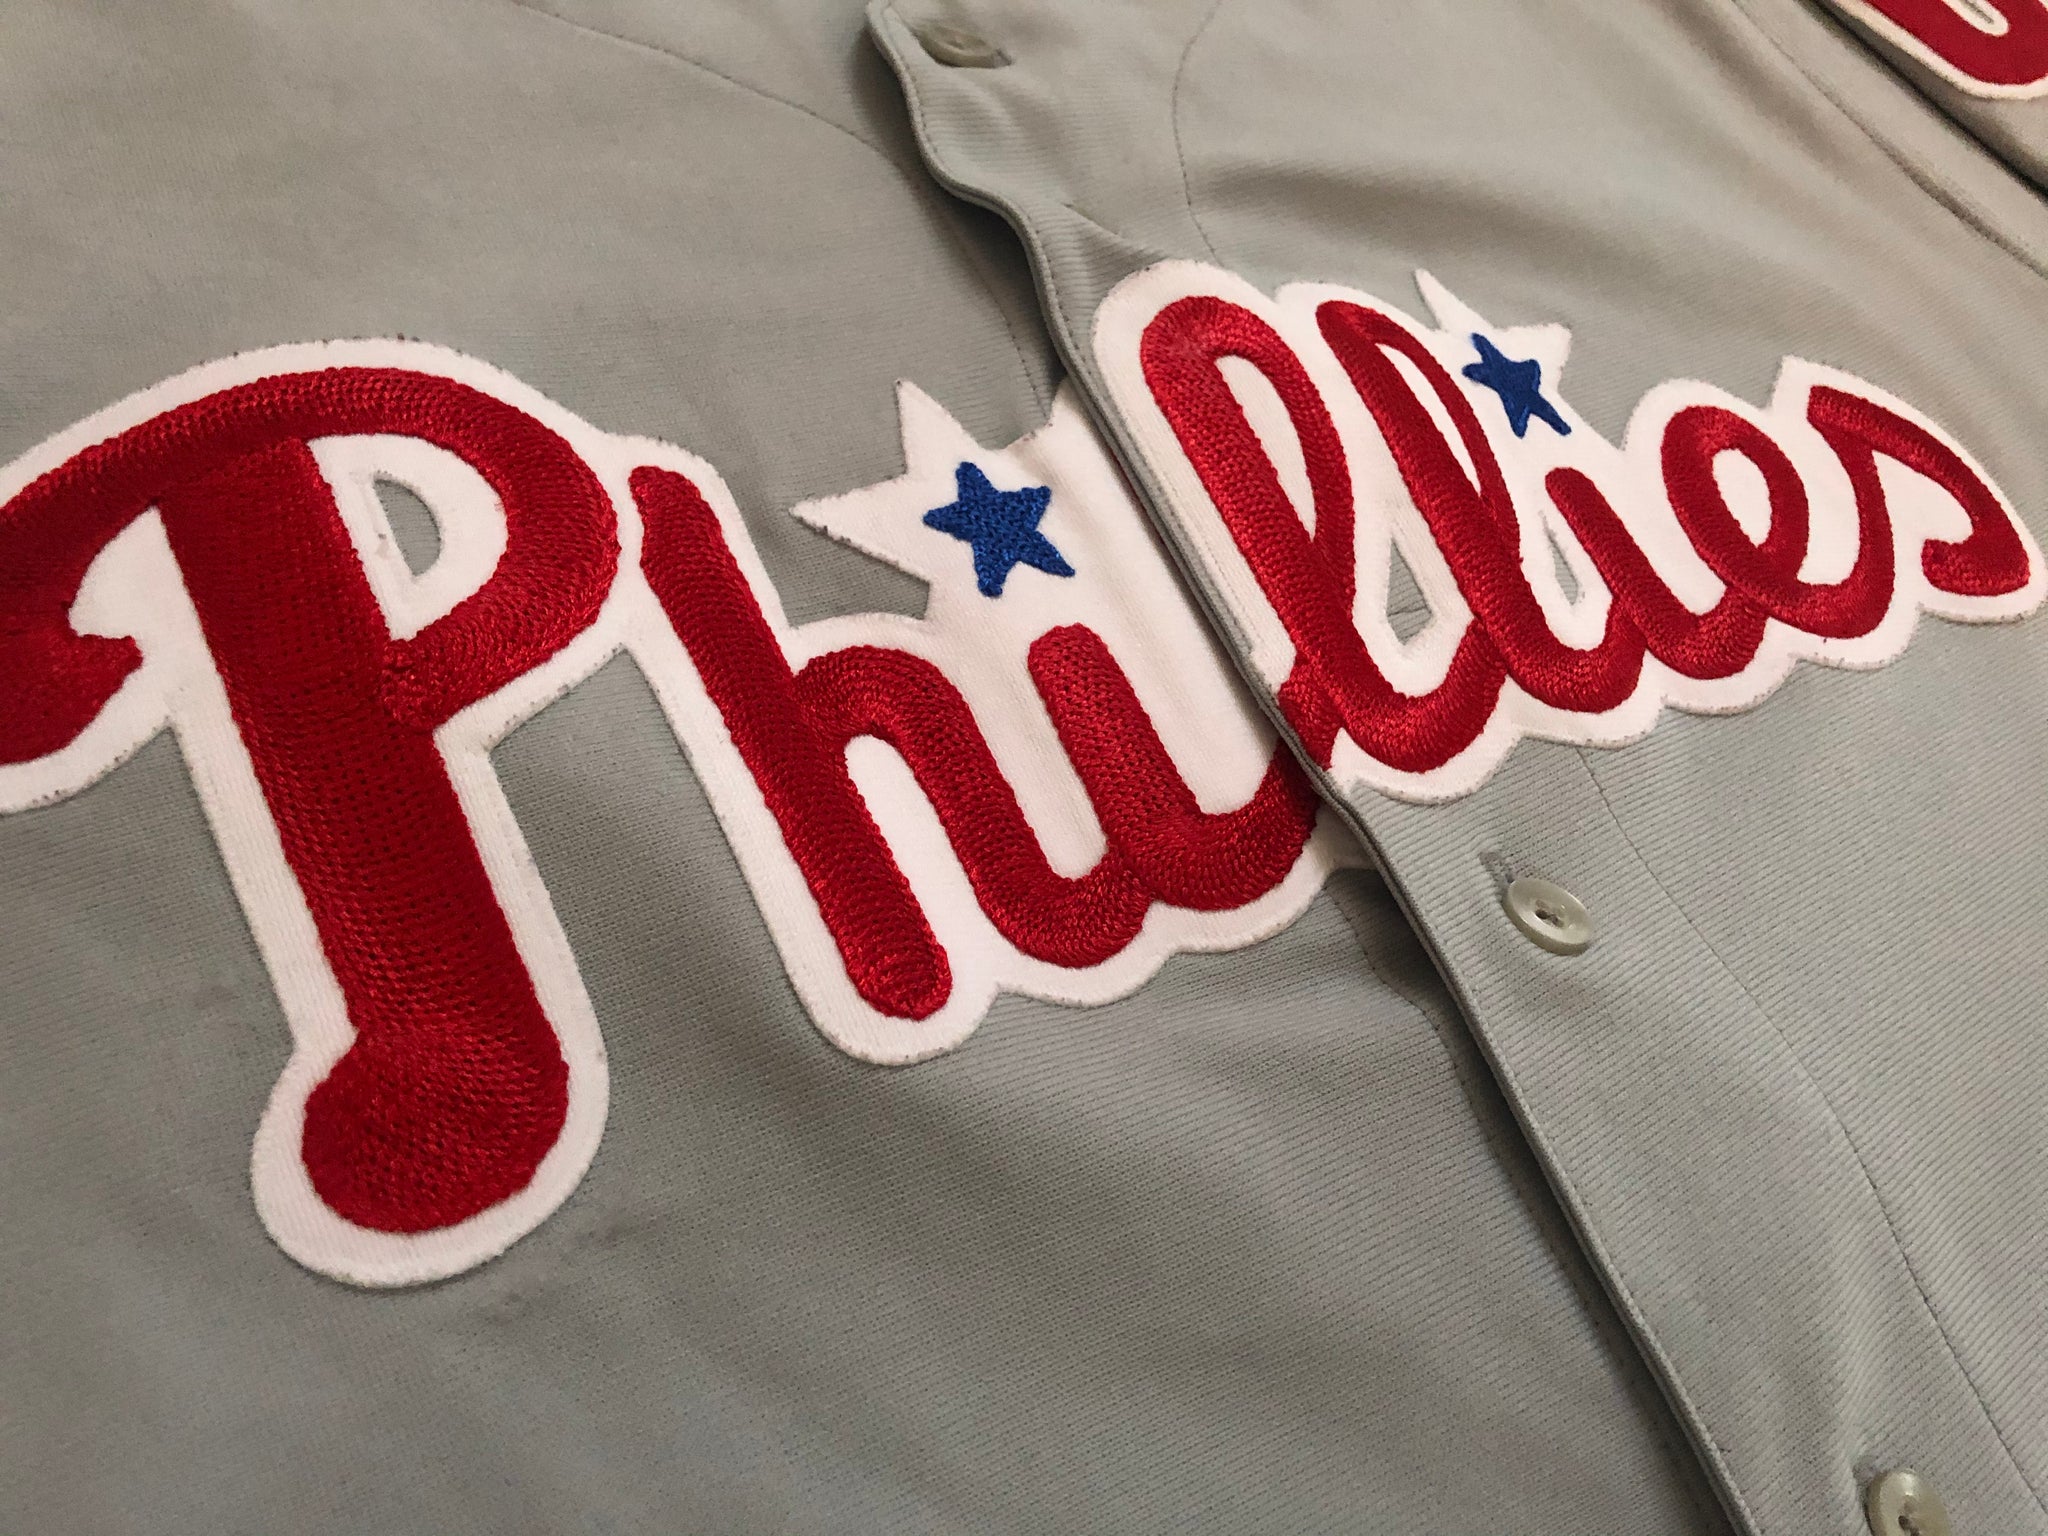 Philadelphia Phillies Ryan Howard Majestic Authentic Baseball Jersey, –  Stuck In The 90s Sports